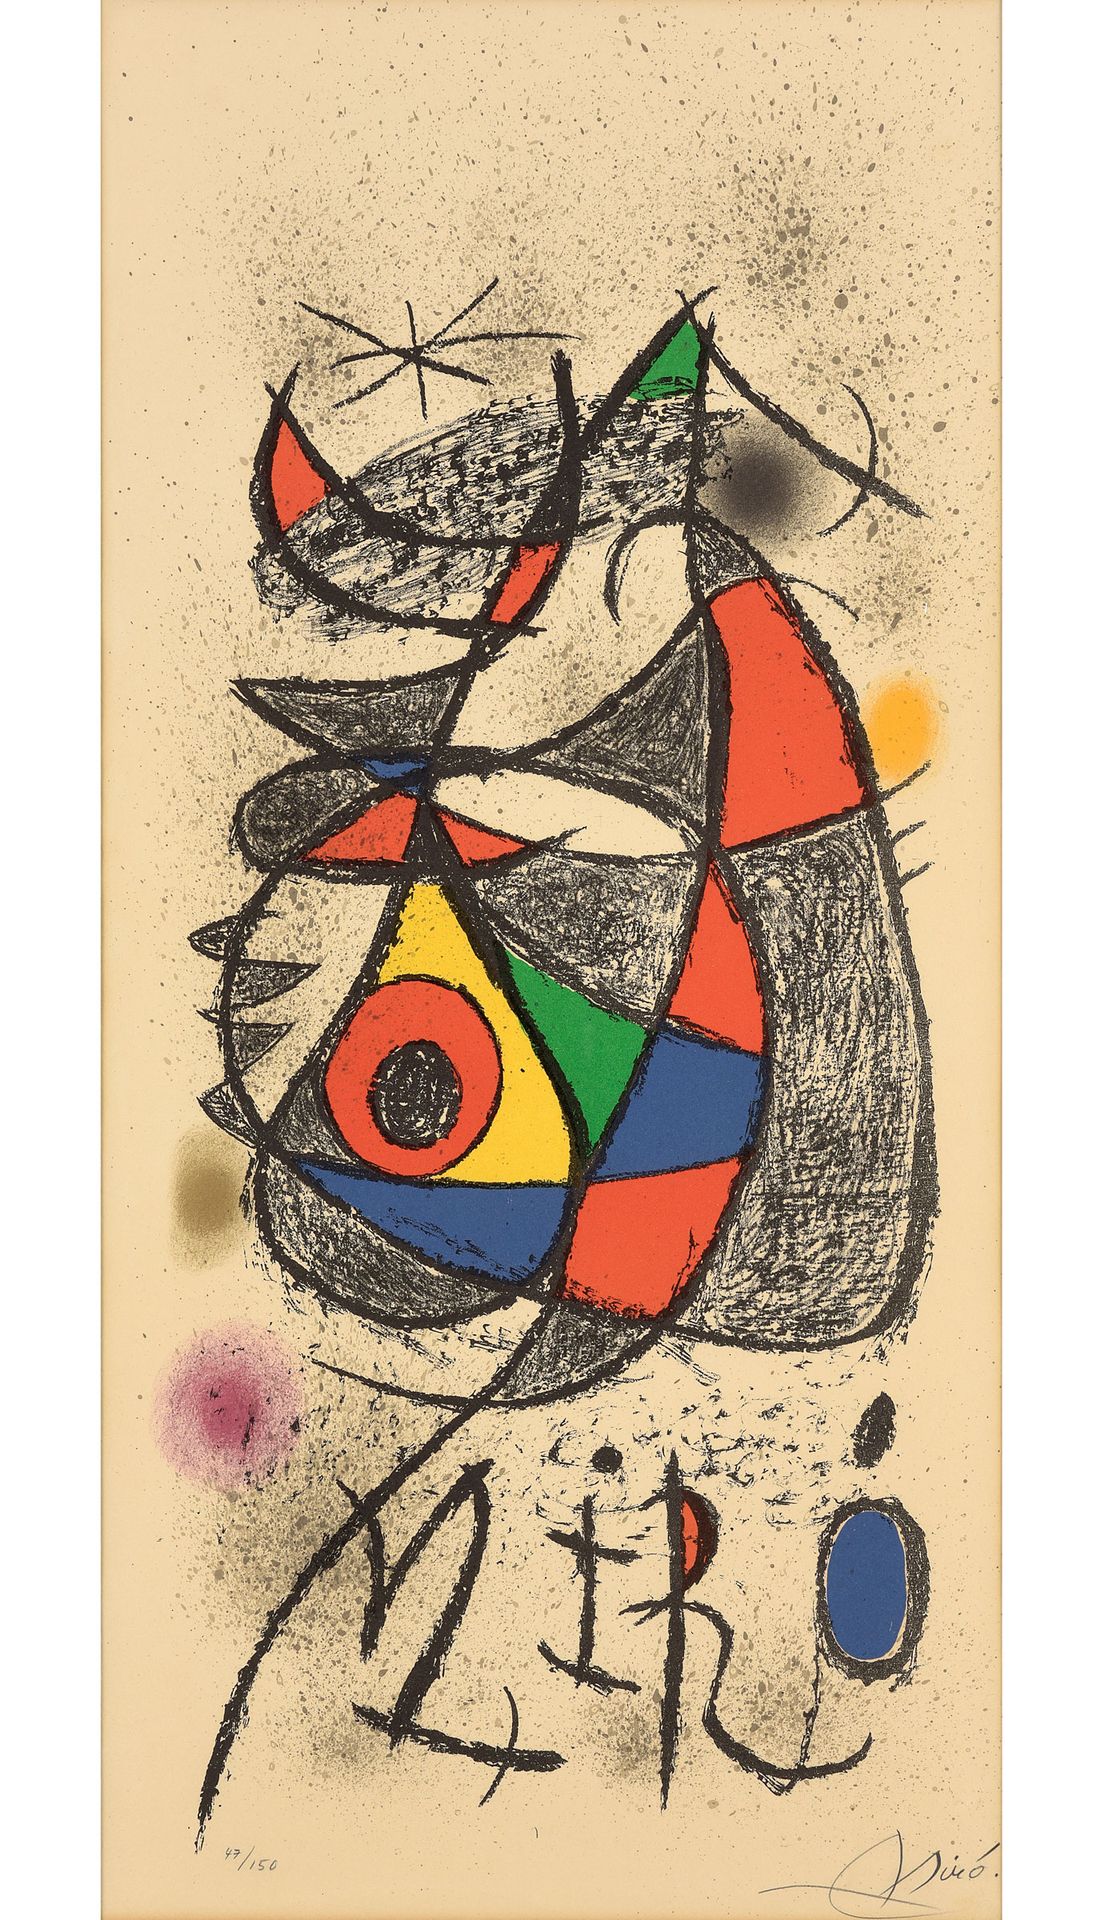 Miro, Joan Miro, Joan 1893 Barcelone - 1983 Palma
Sans titre.
Signé à la main. L&hellip;